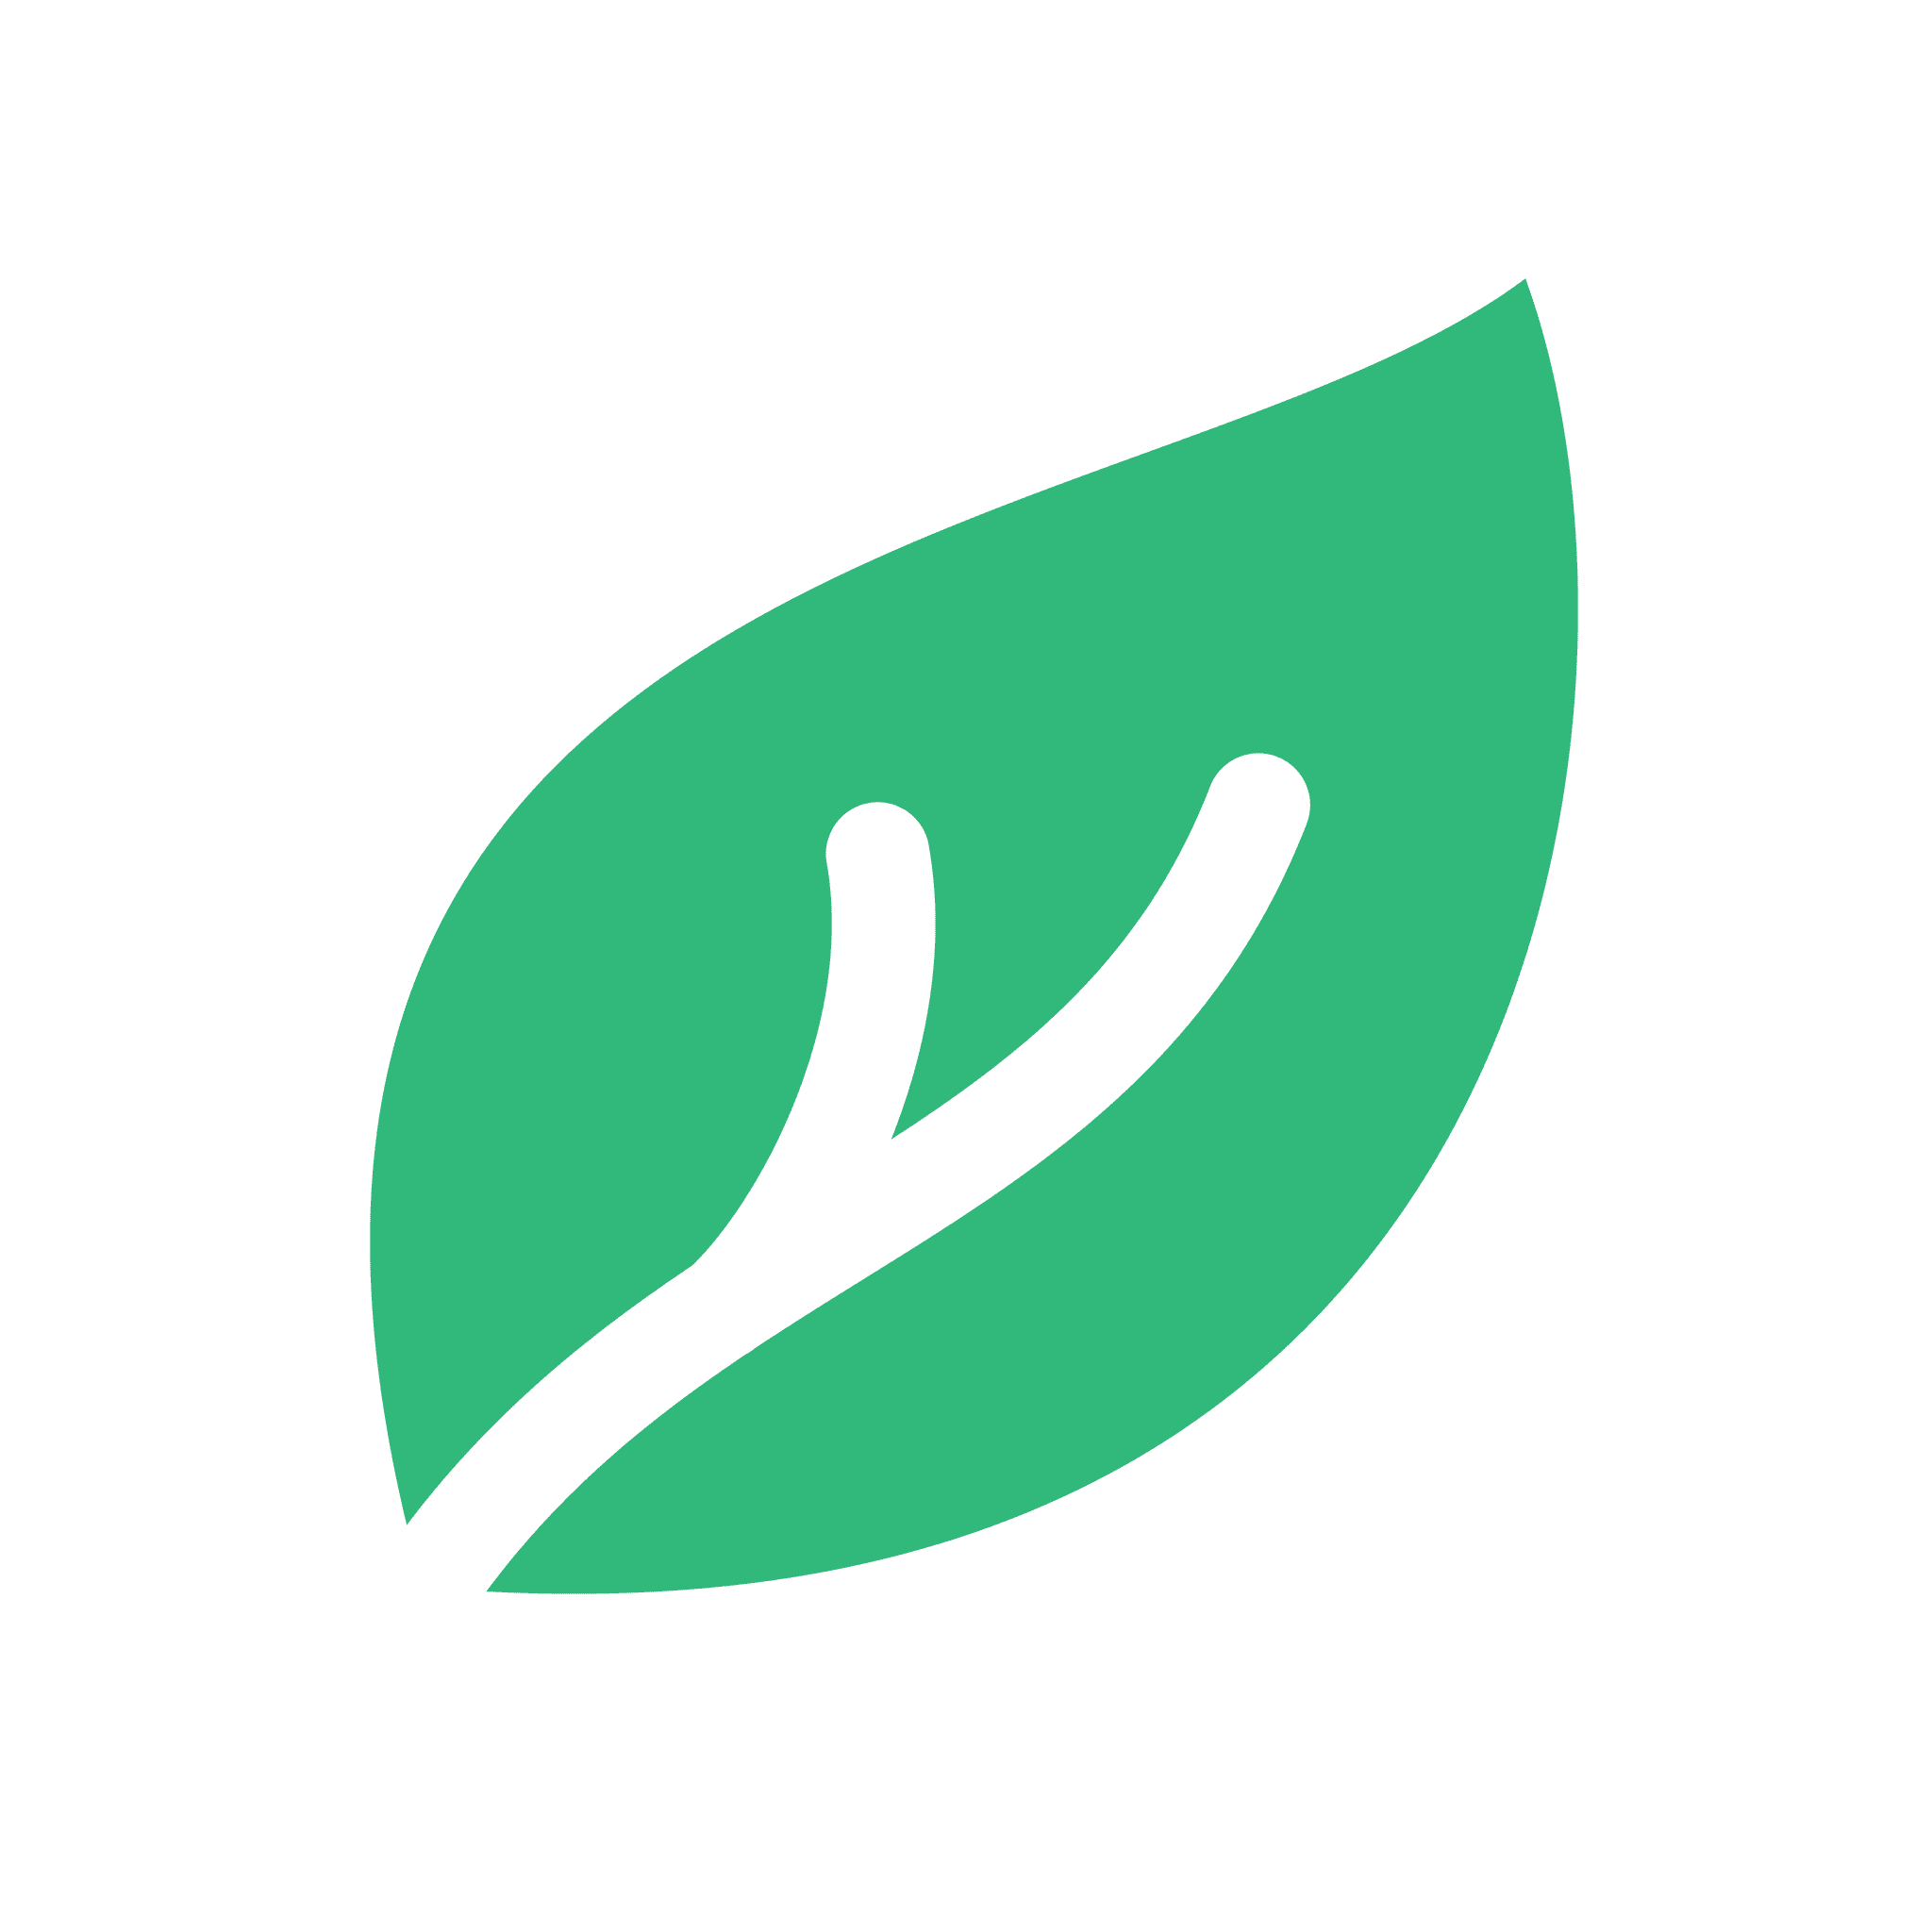 Shipped Green Carbon Neutral Shipment - Zucchero Canada